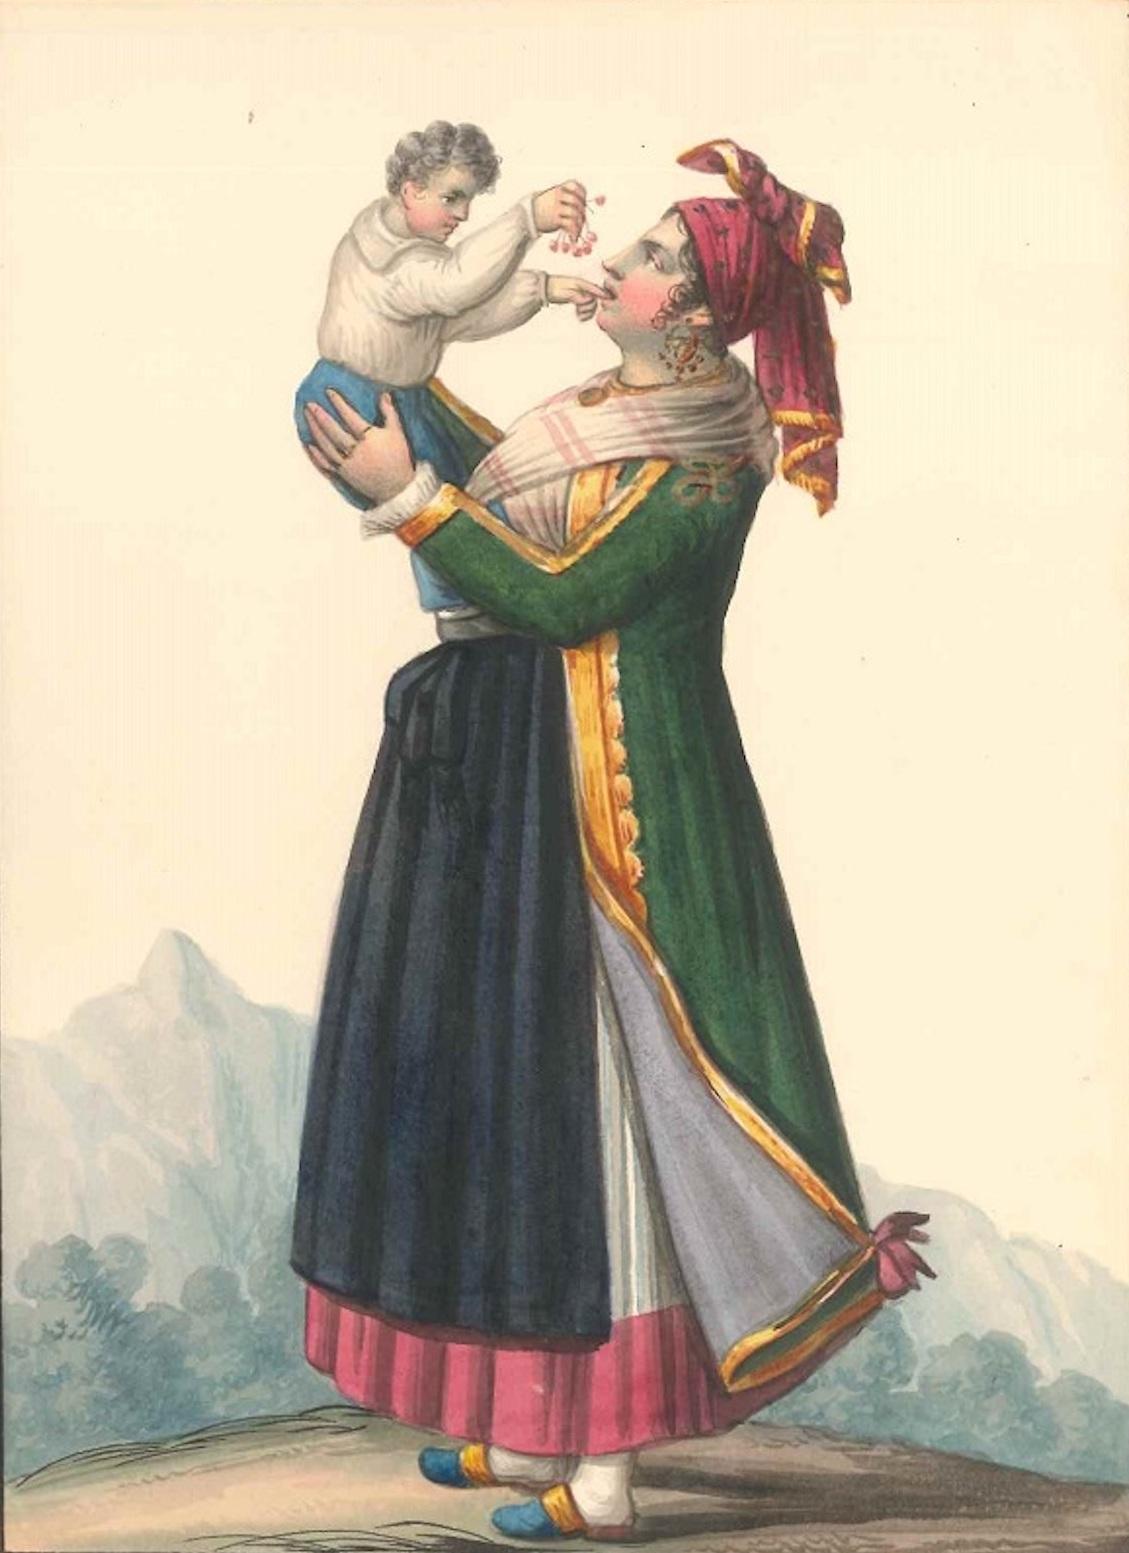 Costume de l'île de Procida  - Aquarelle de M. De Vito, 1820 environ.